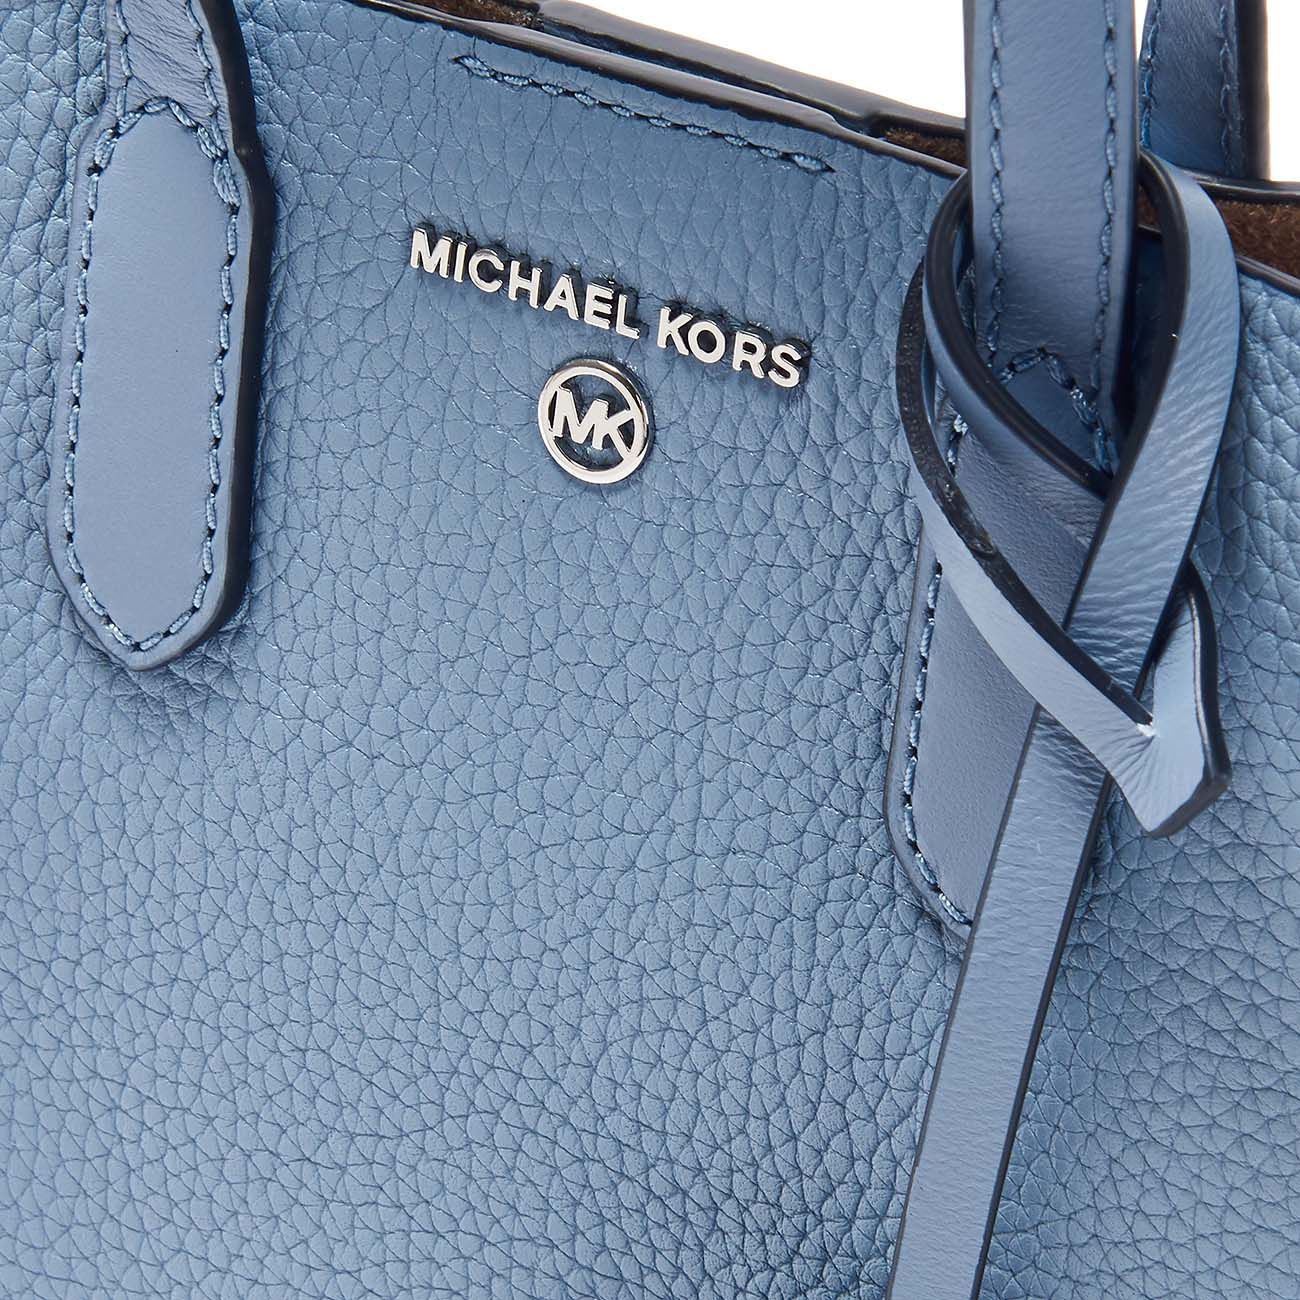 Michael Kors Teal Blue Saffiano Leather Jet Set Shopping Tote Michael Kors